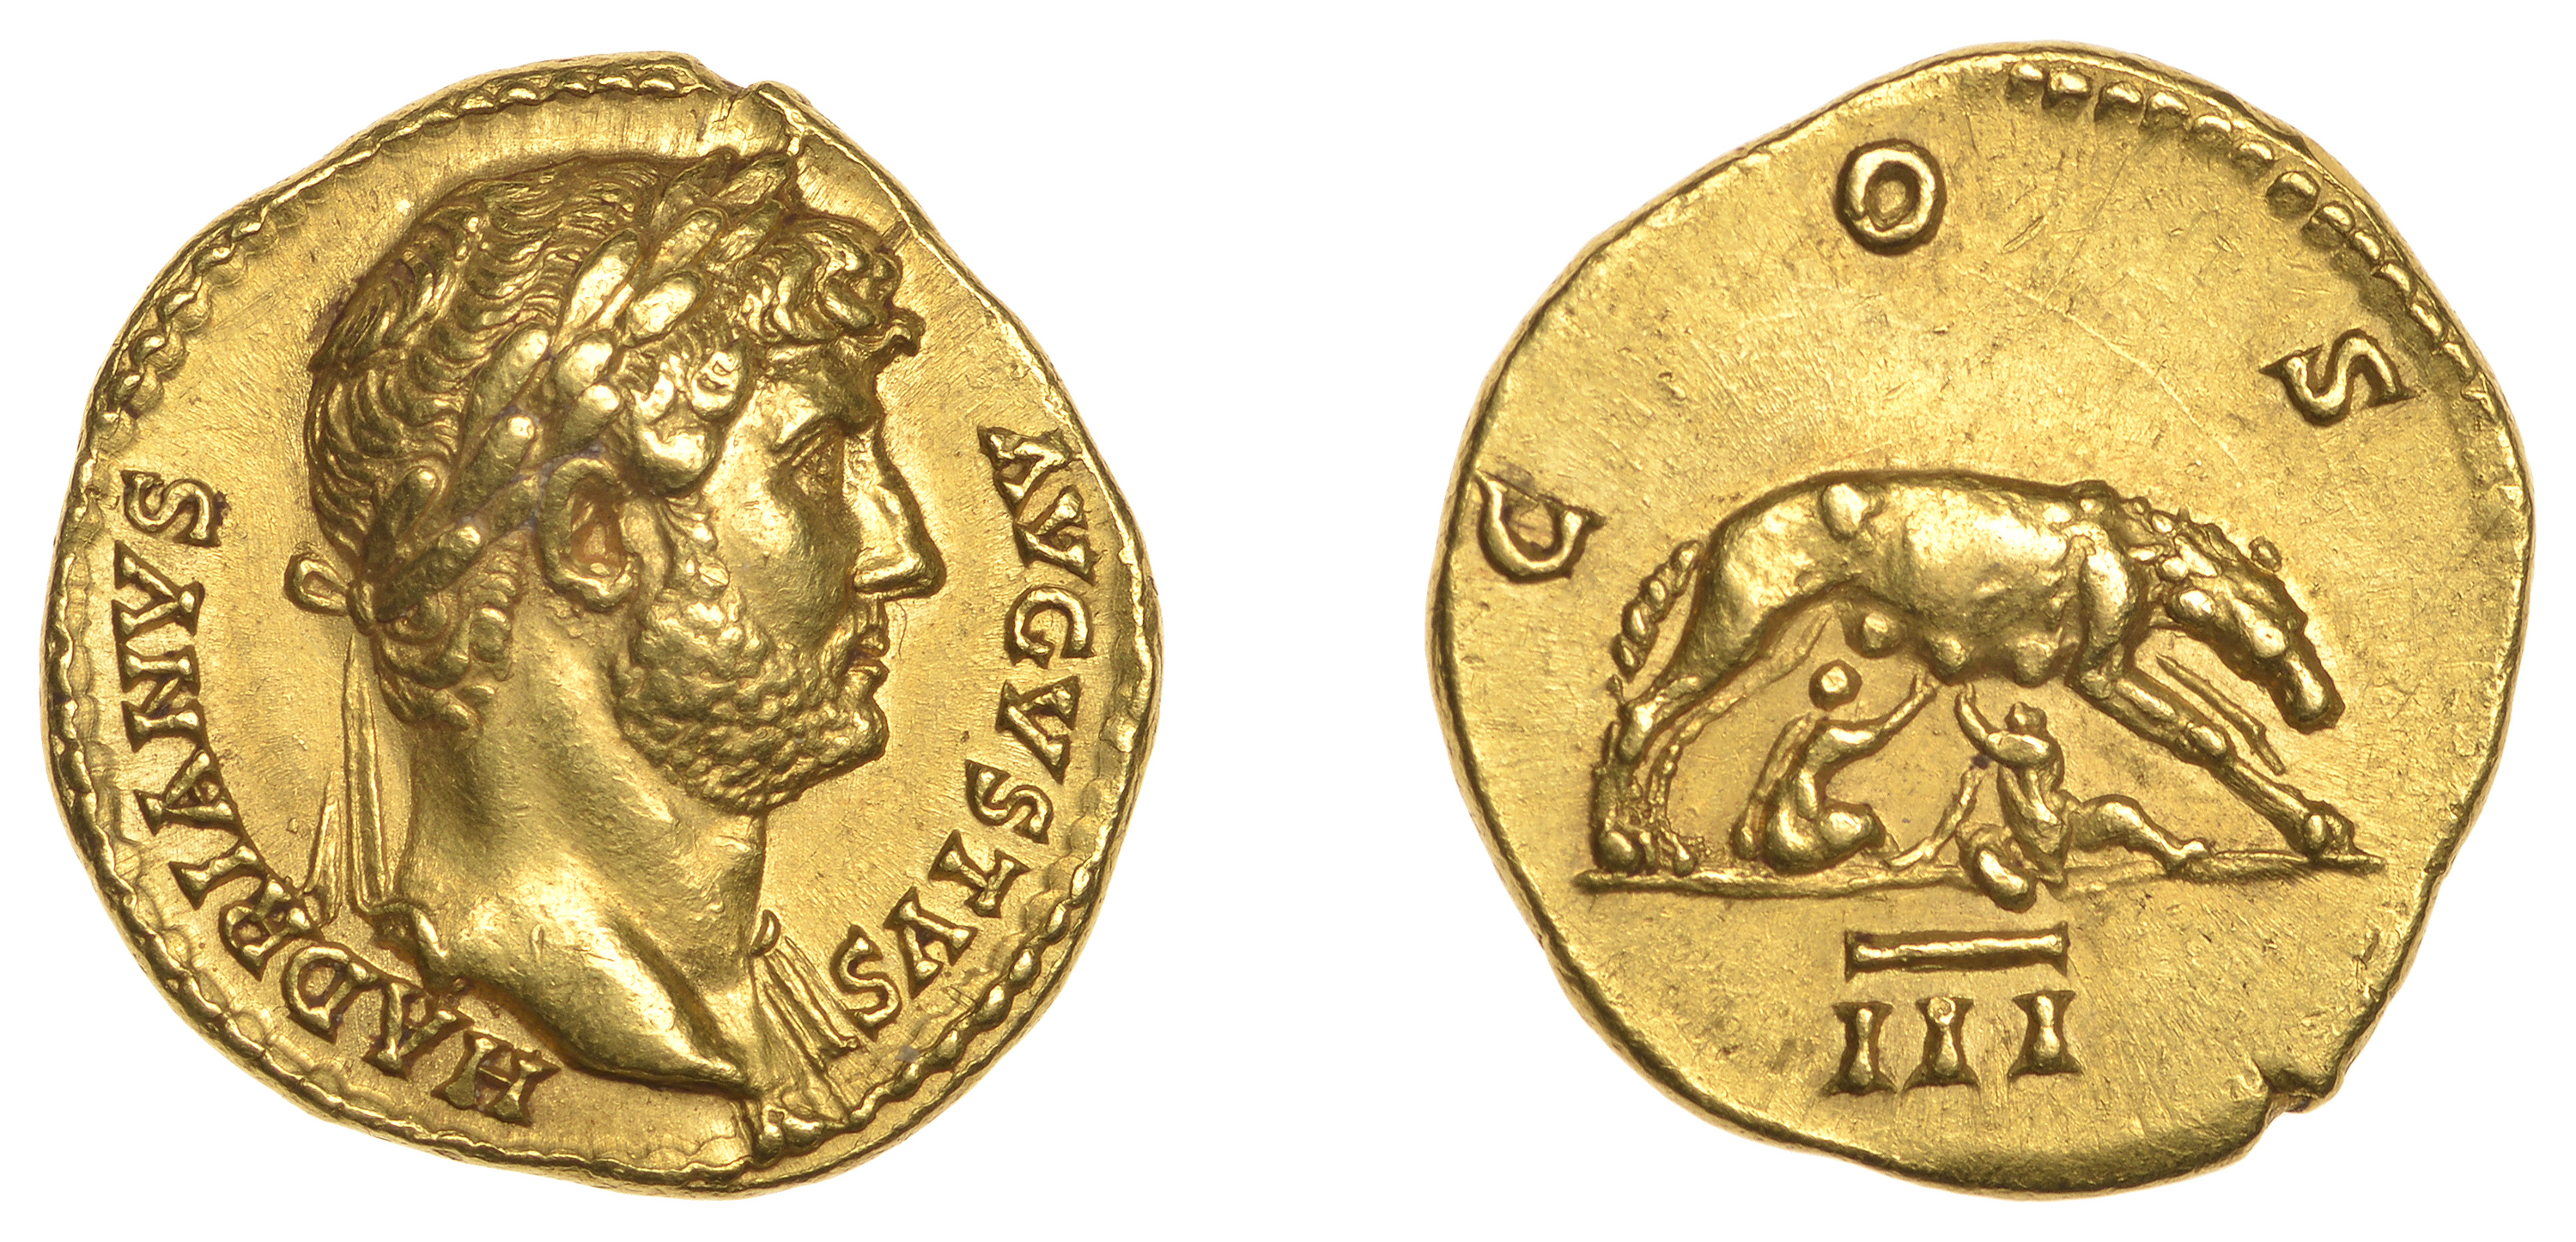 Roman Imperial Coinage, Hadrian, Aureus, c. 124-5, laureate bust right, rev. she-wolf standi...